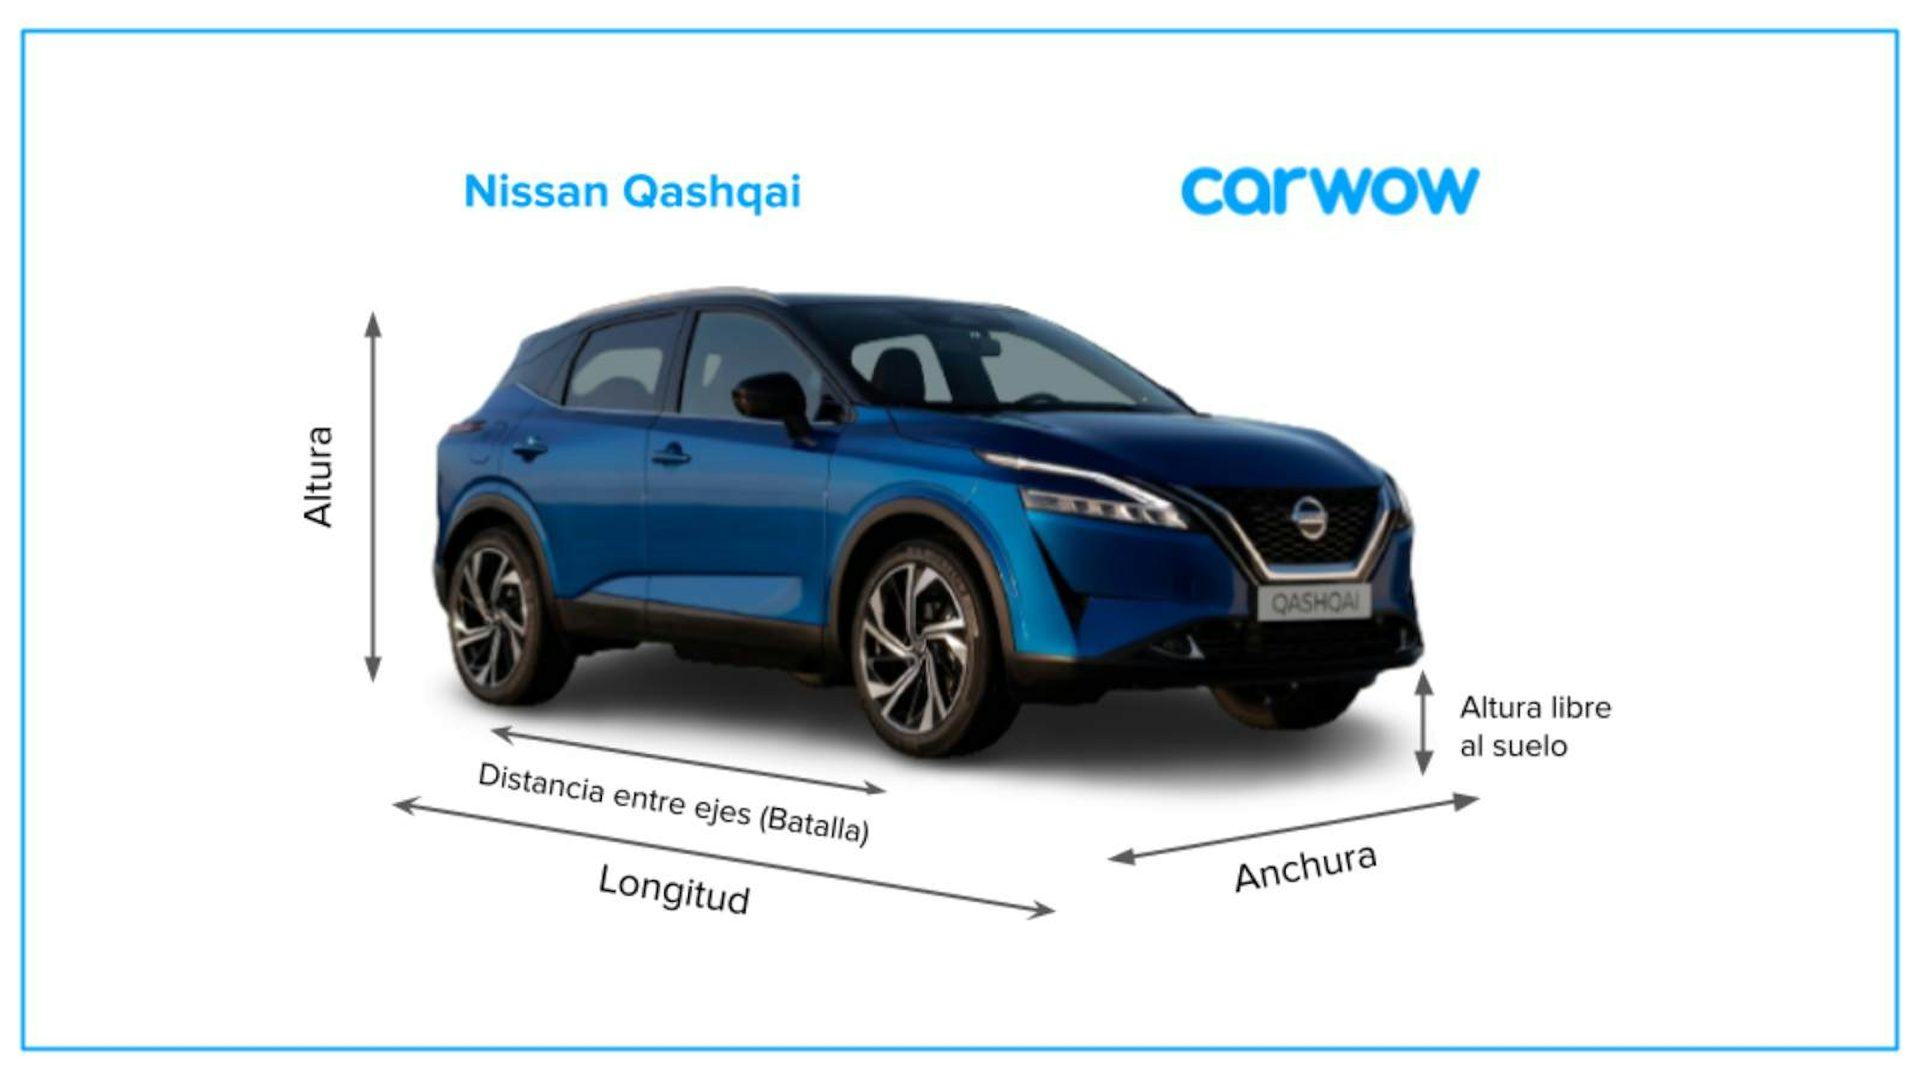 Medidas y maletero del Nissan Qashqai carwow